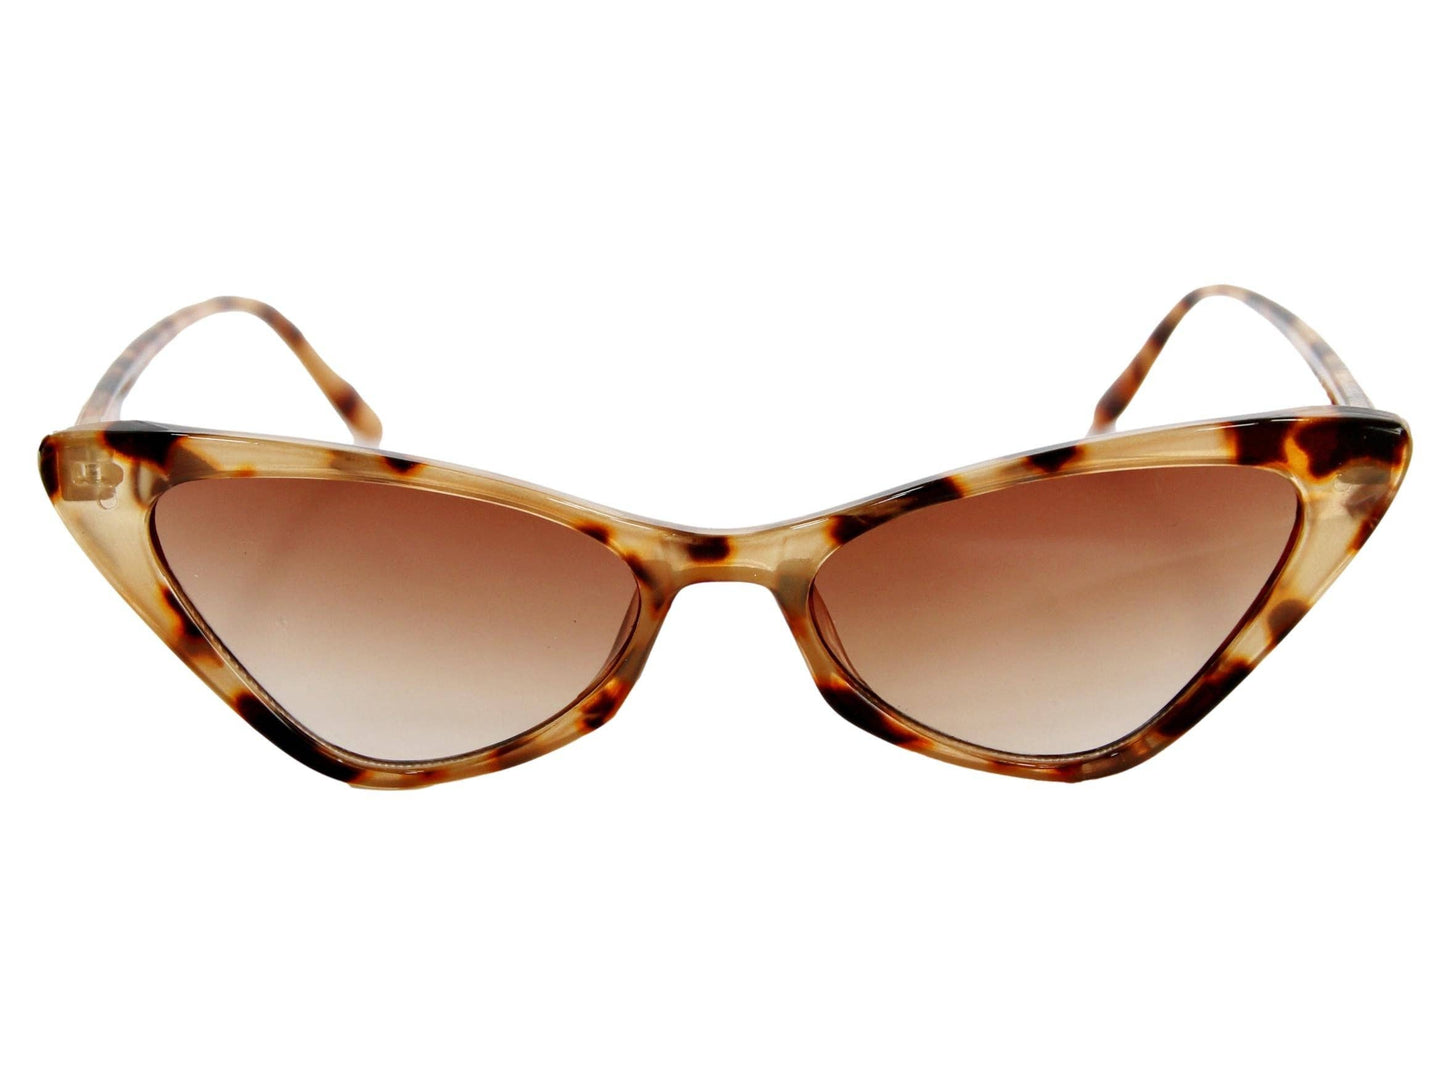 Tort Brown Cat Eye Sunglasses